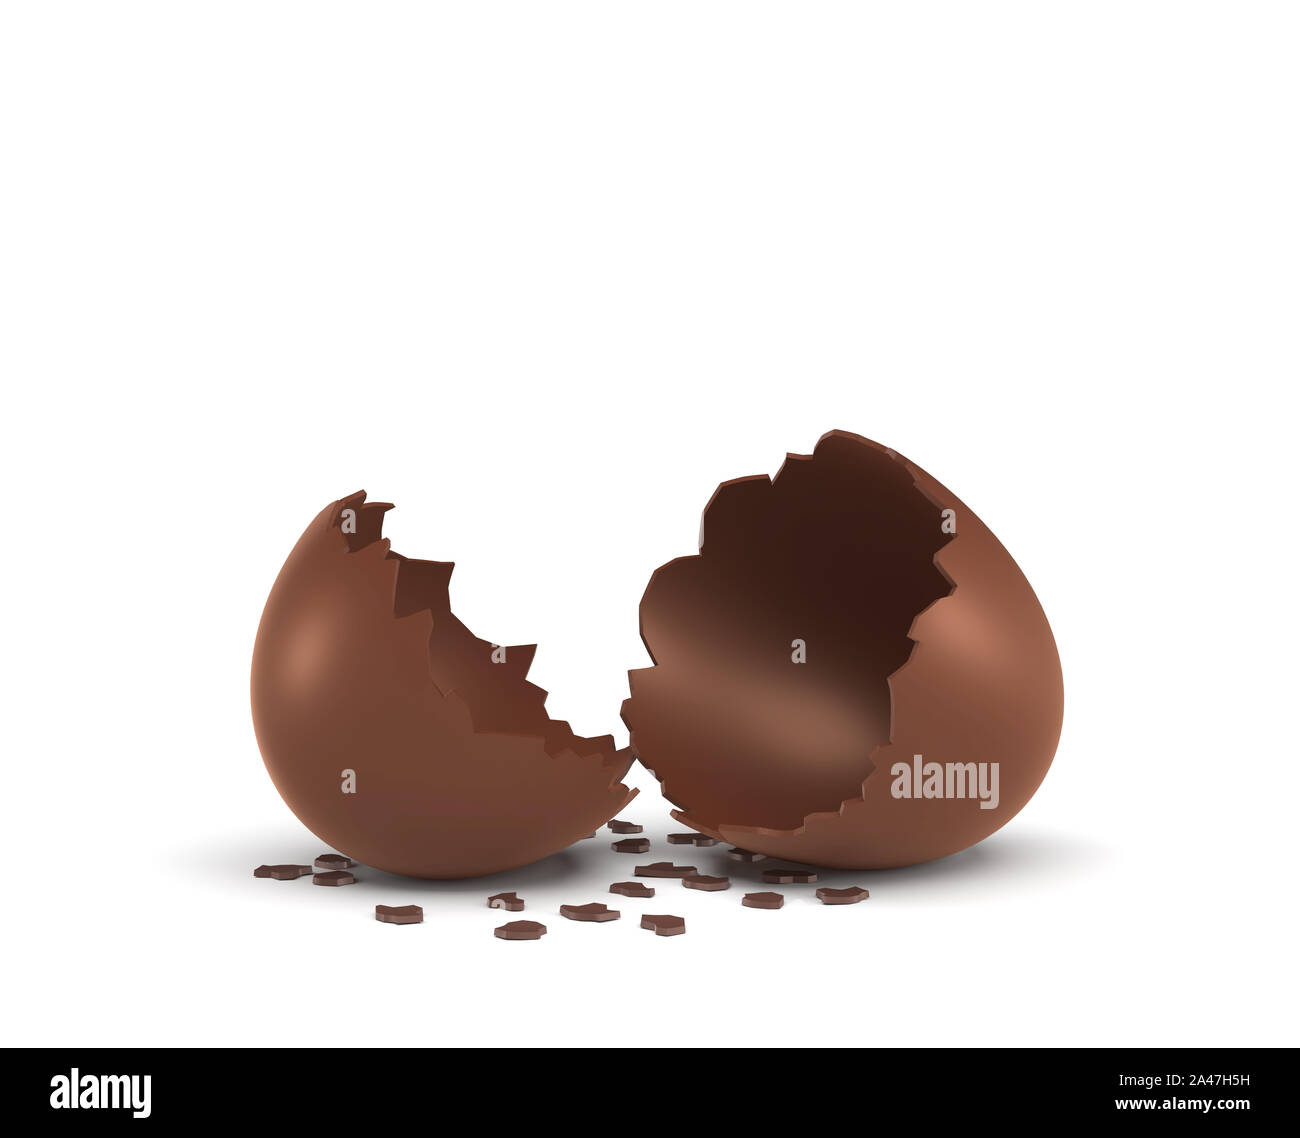 Milk Chocolate Egg That Is Broken PNG Images